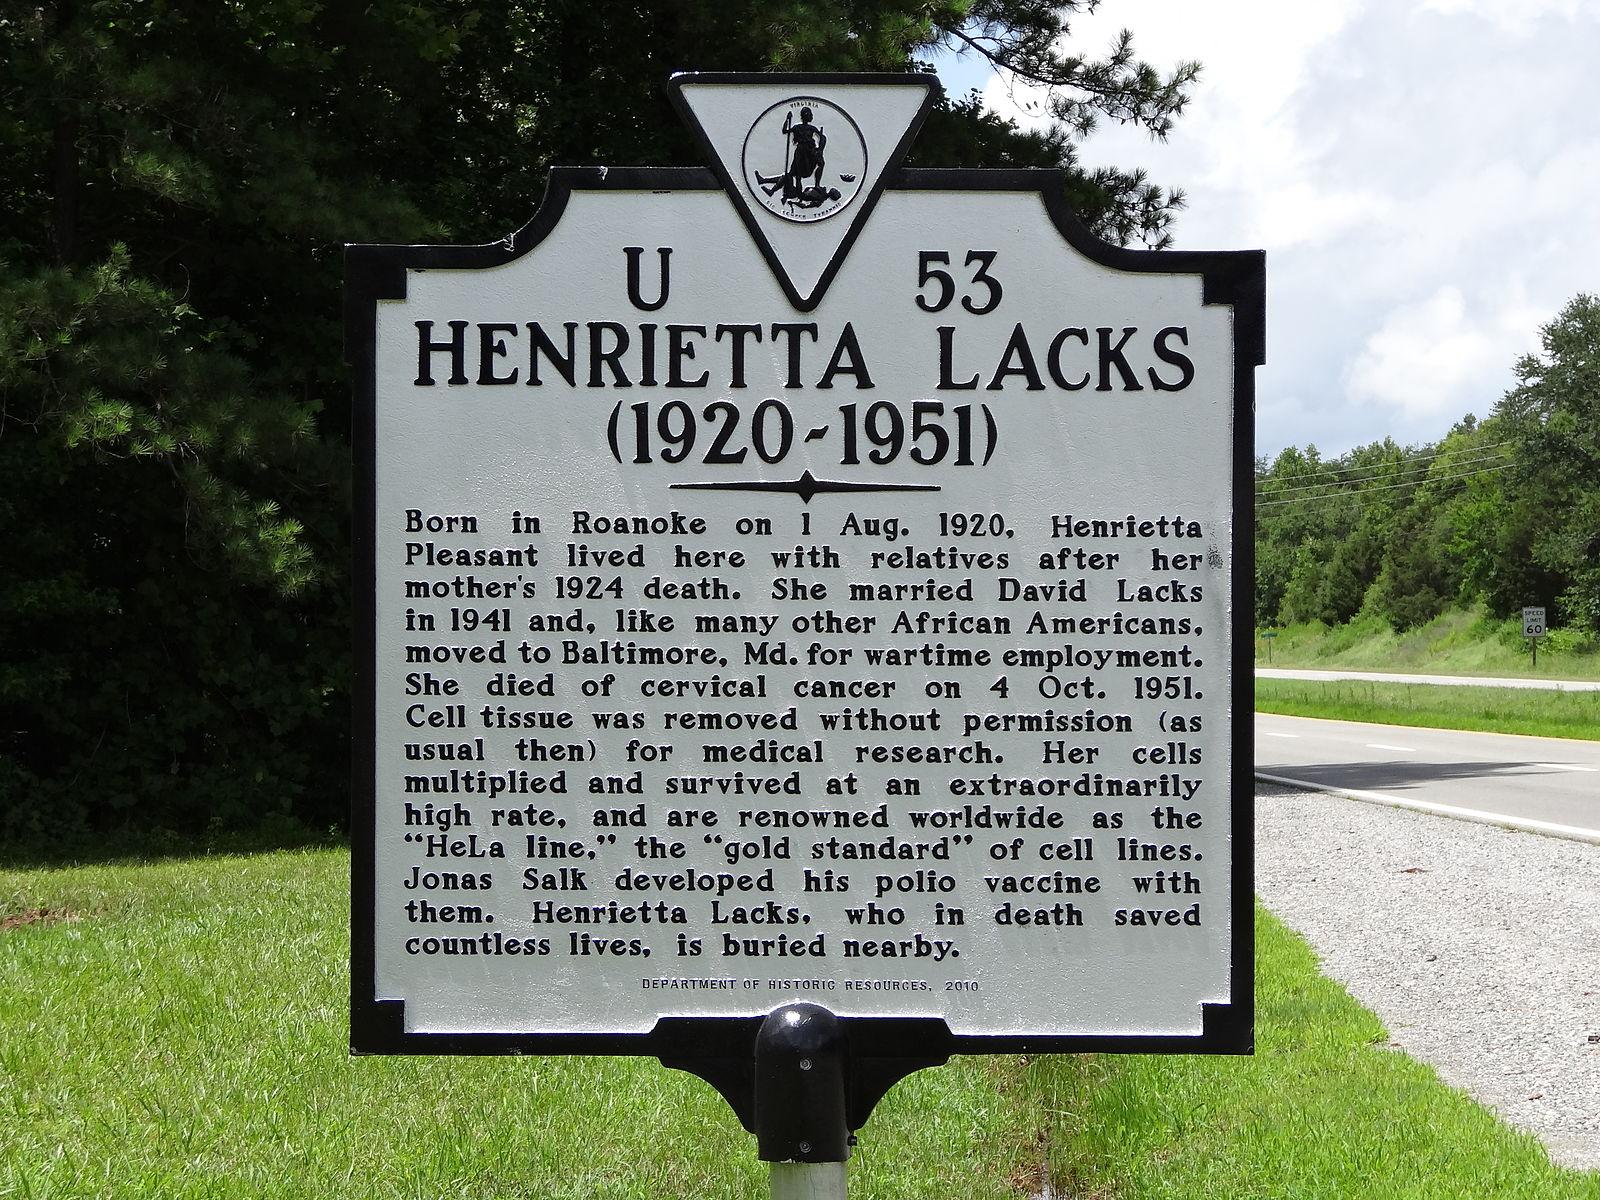 Henrietta lacks historical marker